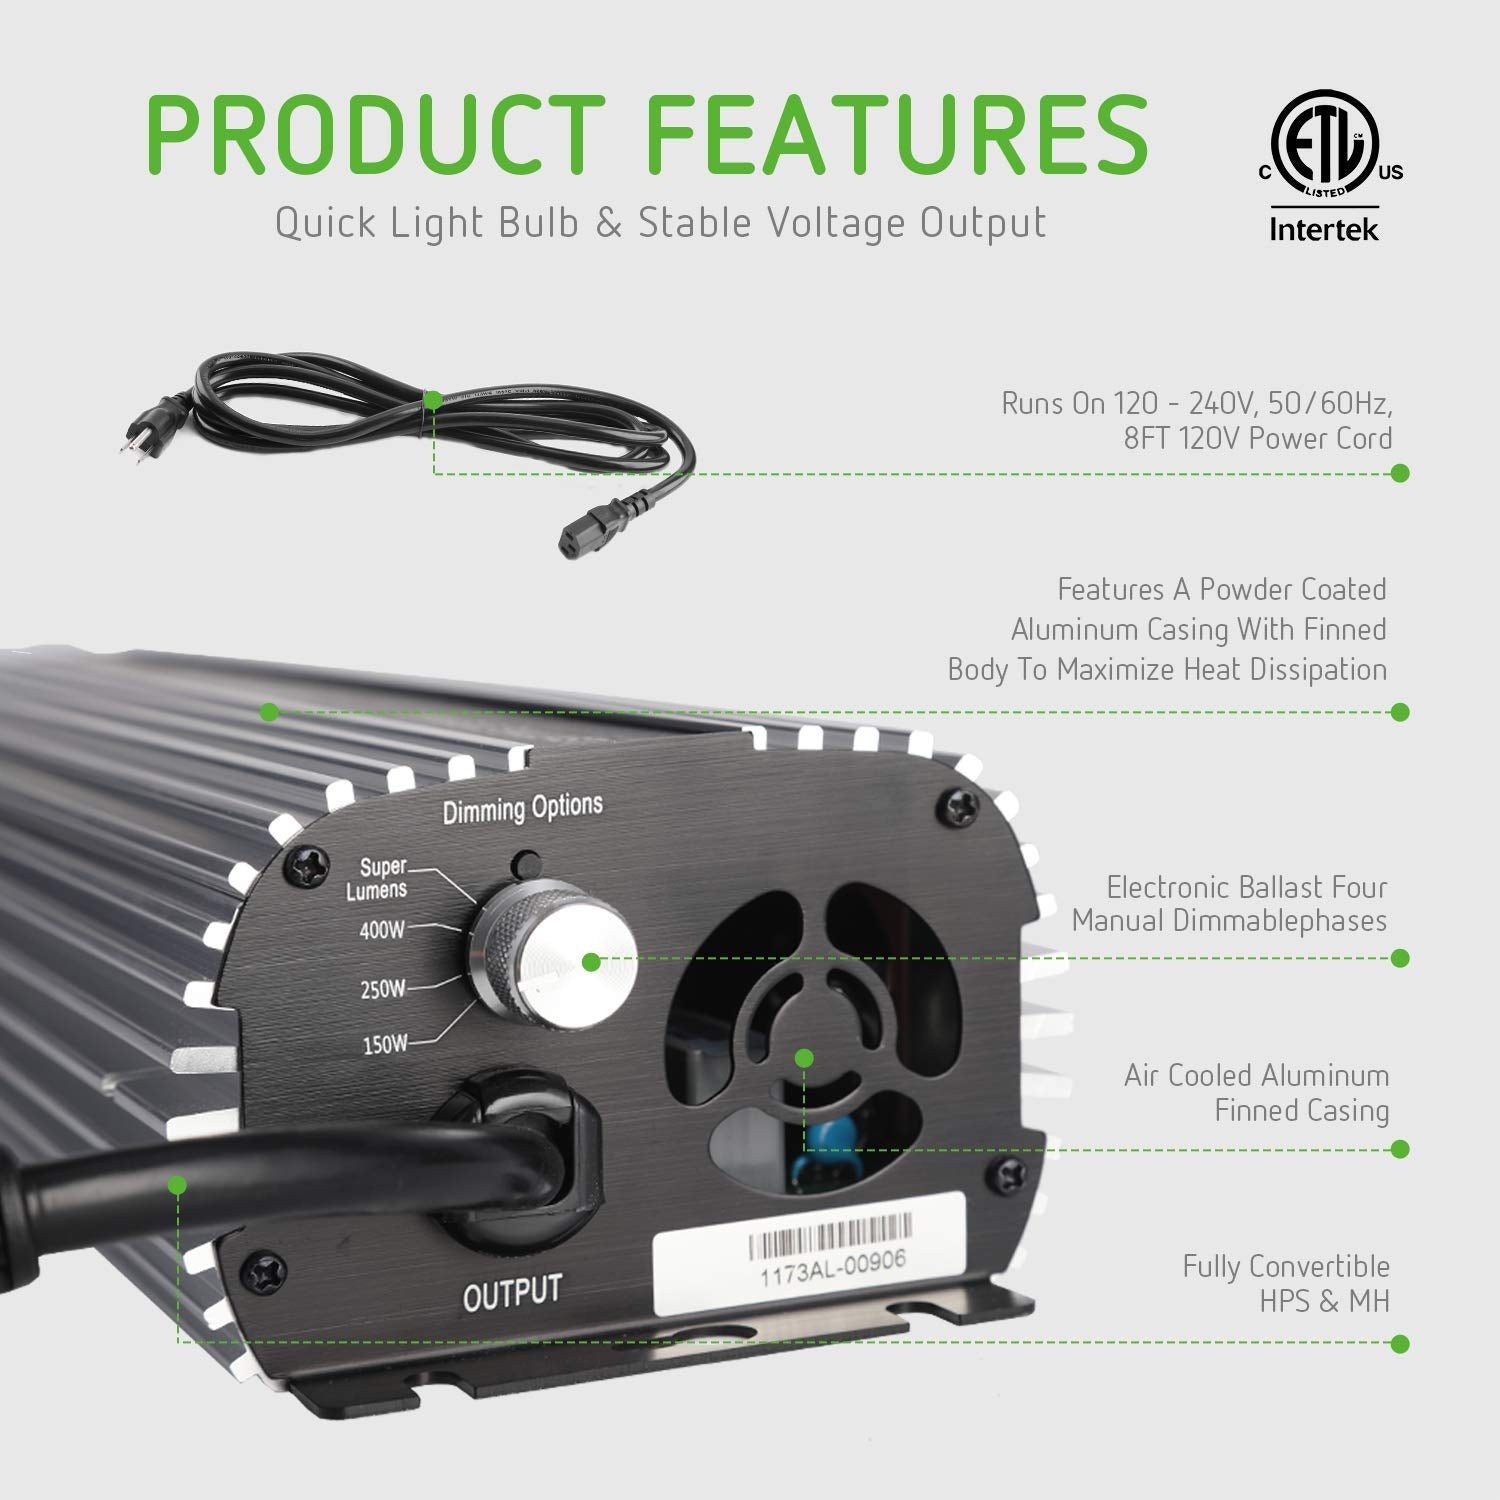 VIVOSUN 400 Watt HPS Grow Light Gull Wing Reflector Kit - Easy to Set up